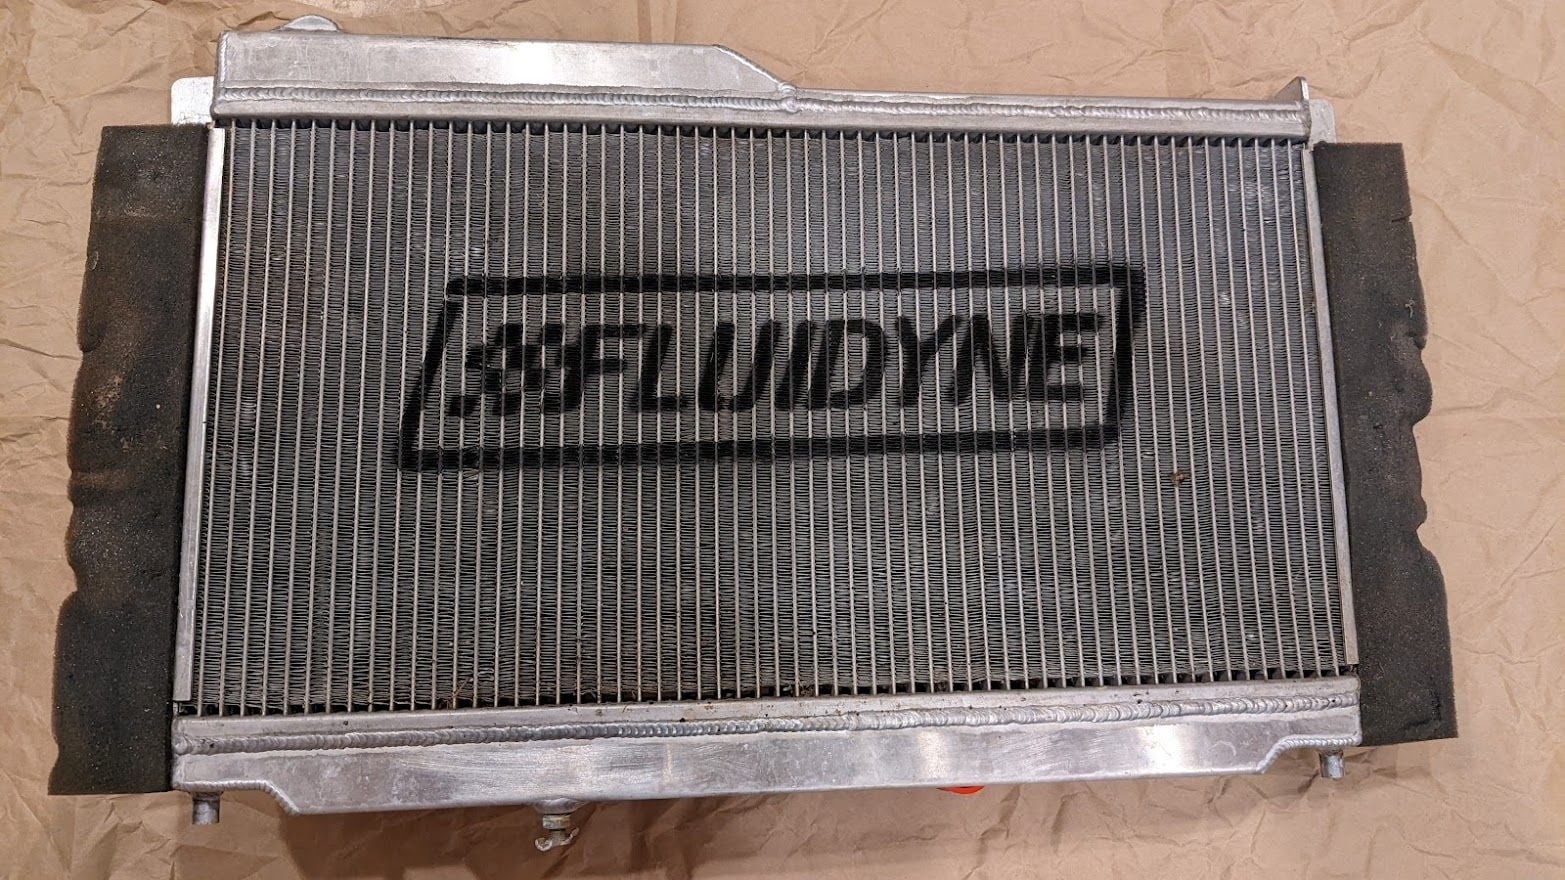 Miscellaneous - Fluidyne Radiator - Used - 1993 to 2002 Mazda RX-7 - Madison, WI 53703, United States